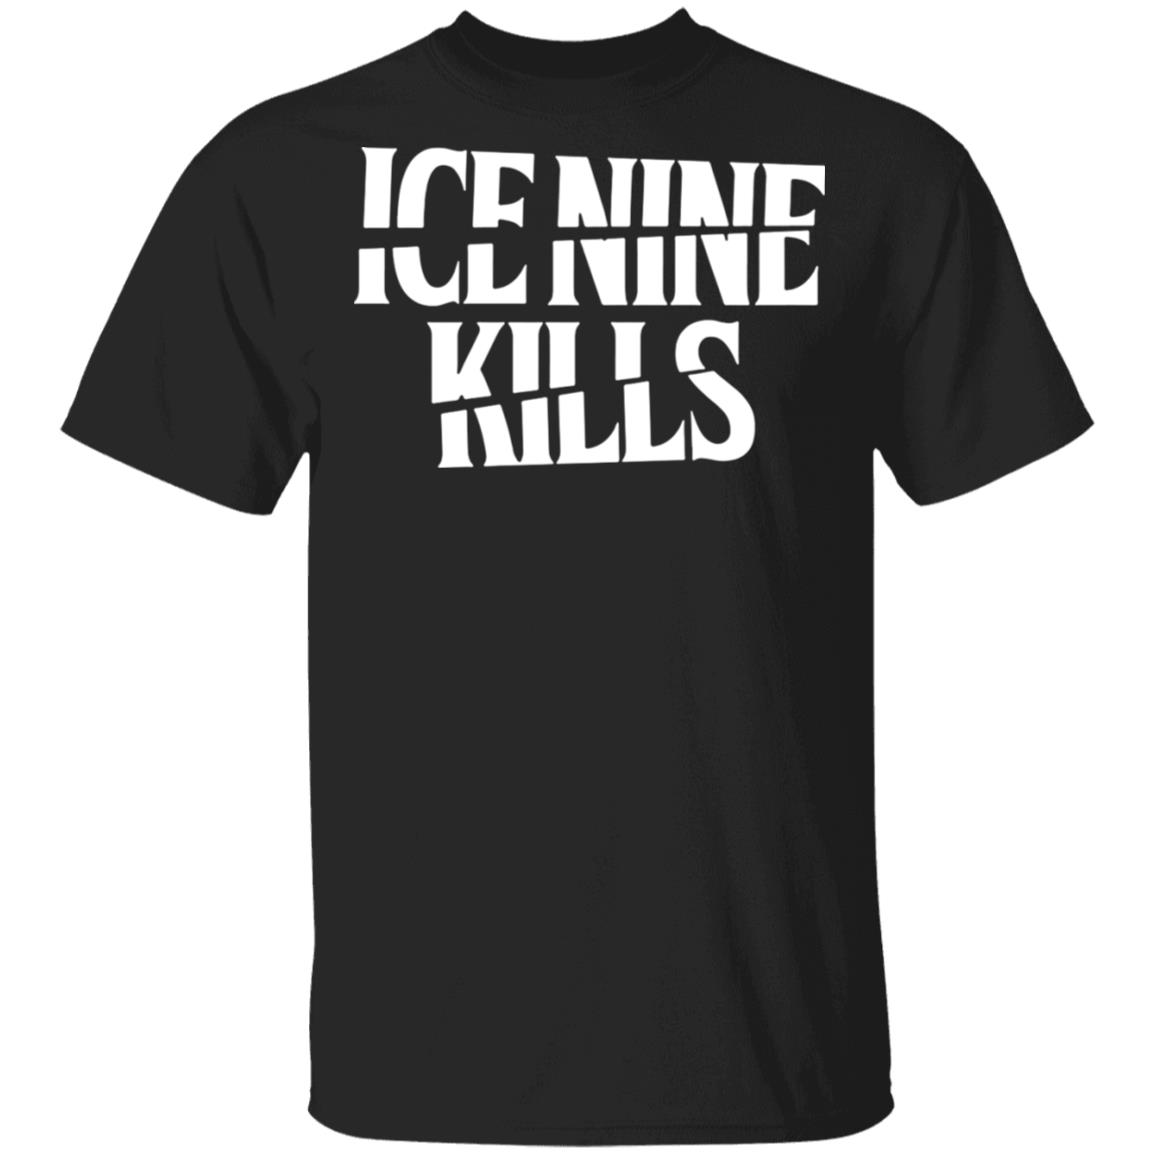 Ice Nine Kills Merch Worst Nightmare Tee
#IceNineKills #Merch #WorstNightmareTee #BandMerch #MusicMerch #MetalcoreFashion #GraphicTee #ConcertWear #AlternativeFashion #RockMerch #BandTee #TipateeMerch

tipatee.com/product/ice-ni…